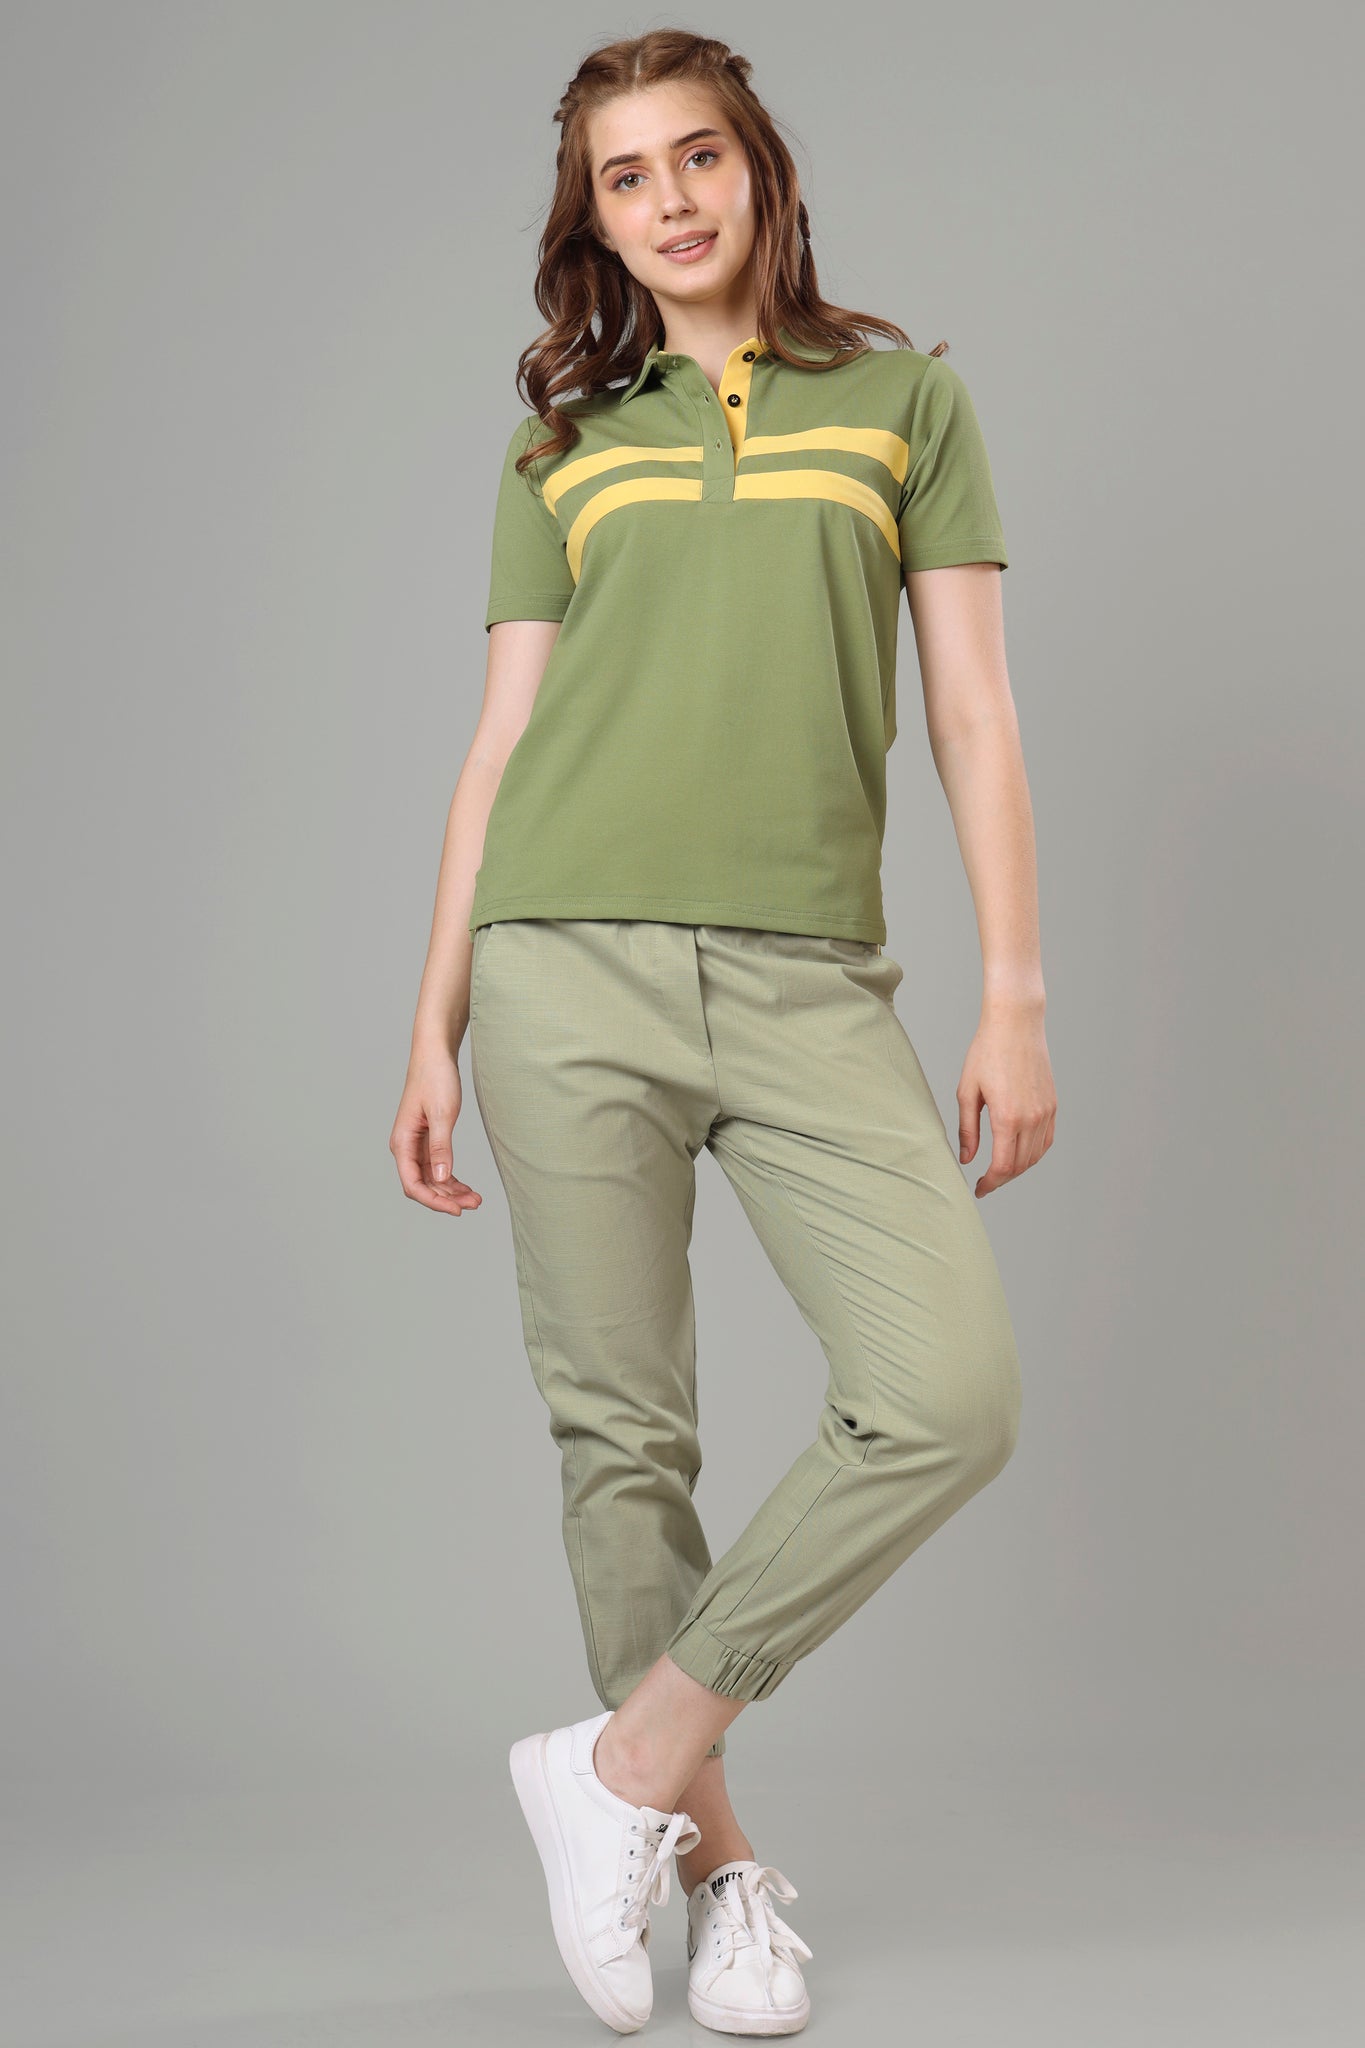 Exclusive Fern Green Polo T-Shirt For Women